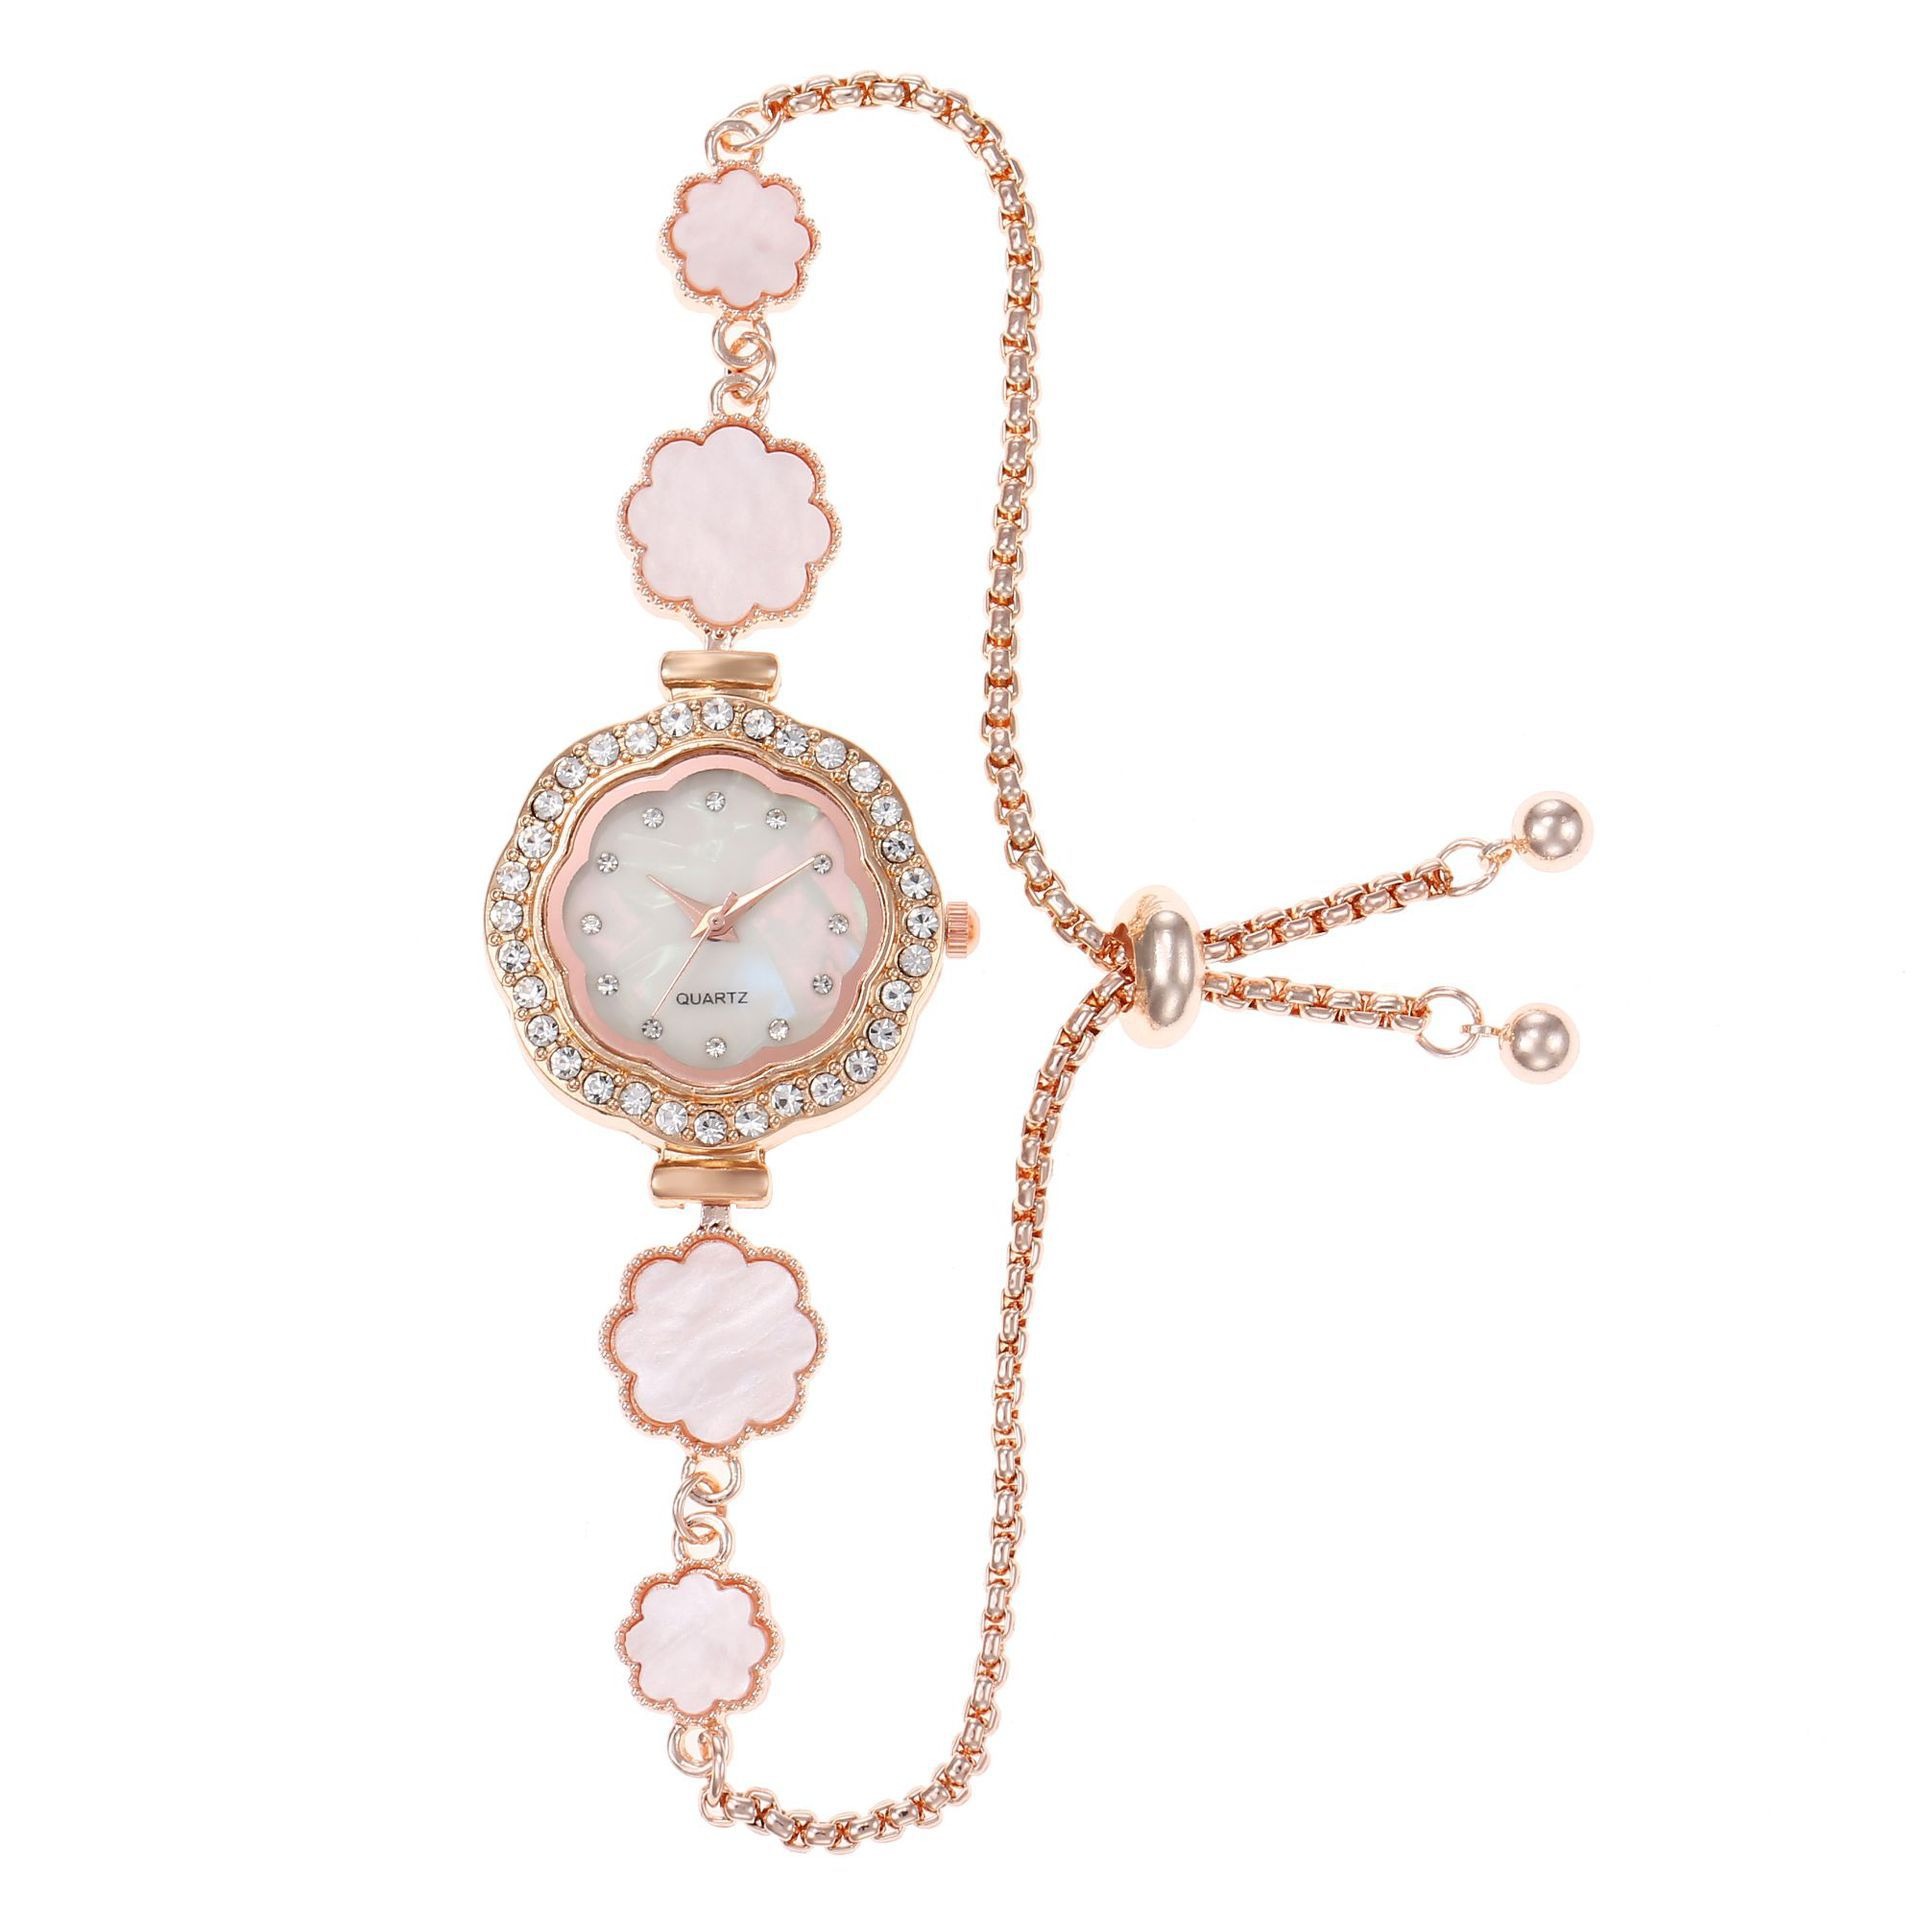 Fashionable new style drawstring freely adjustable women’s bracelet watch flower shaped shell thin bracelet with diamond inlaid women’s watch